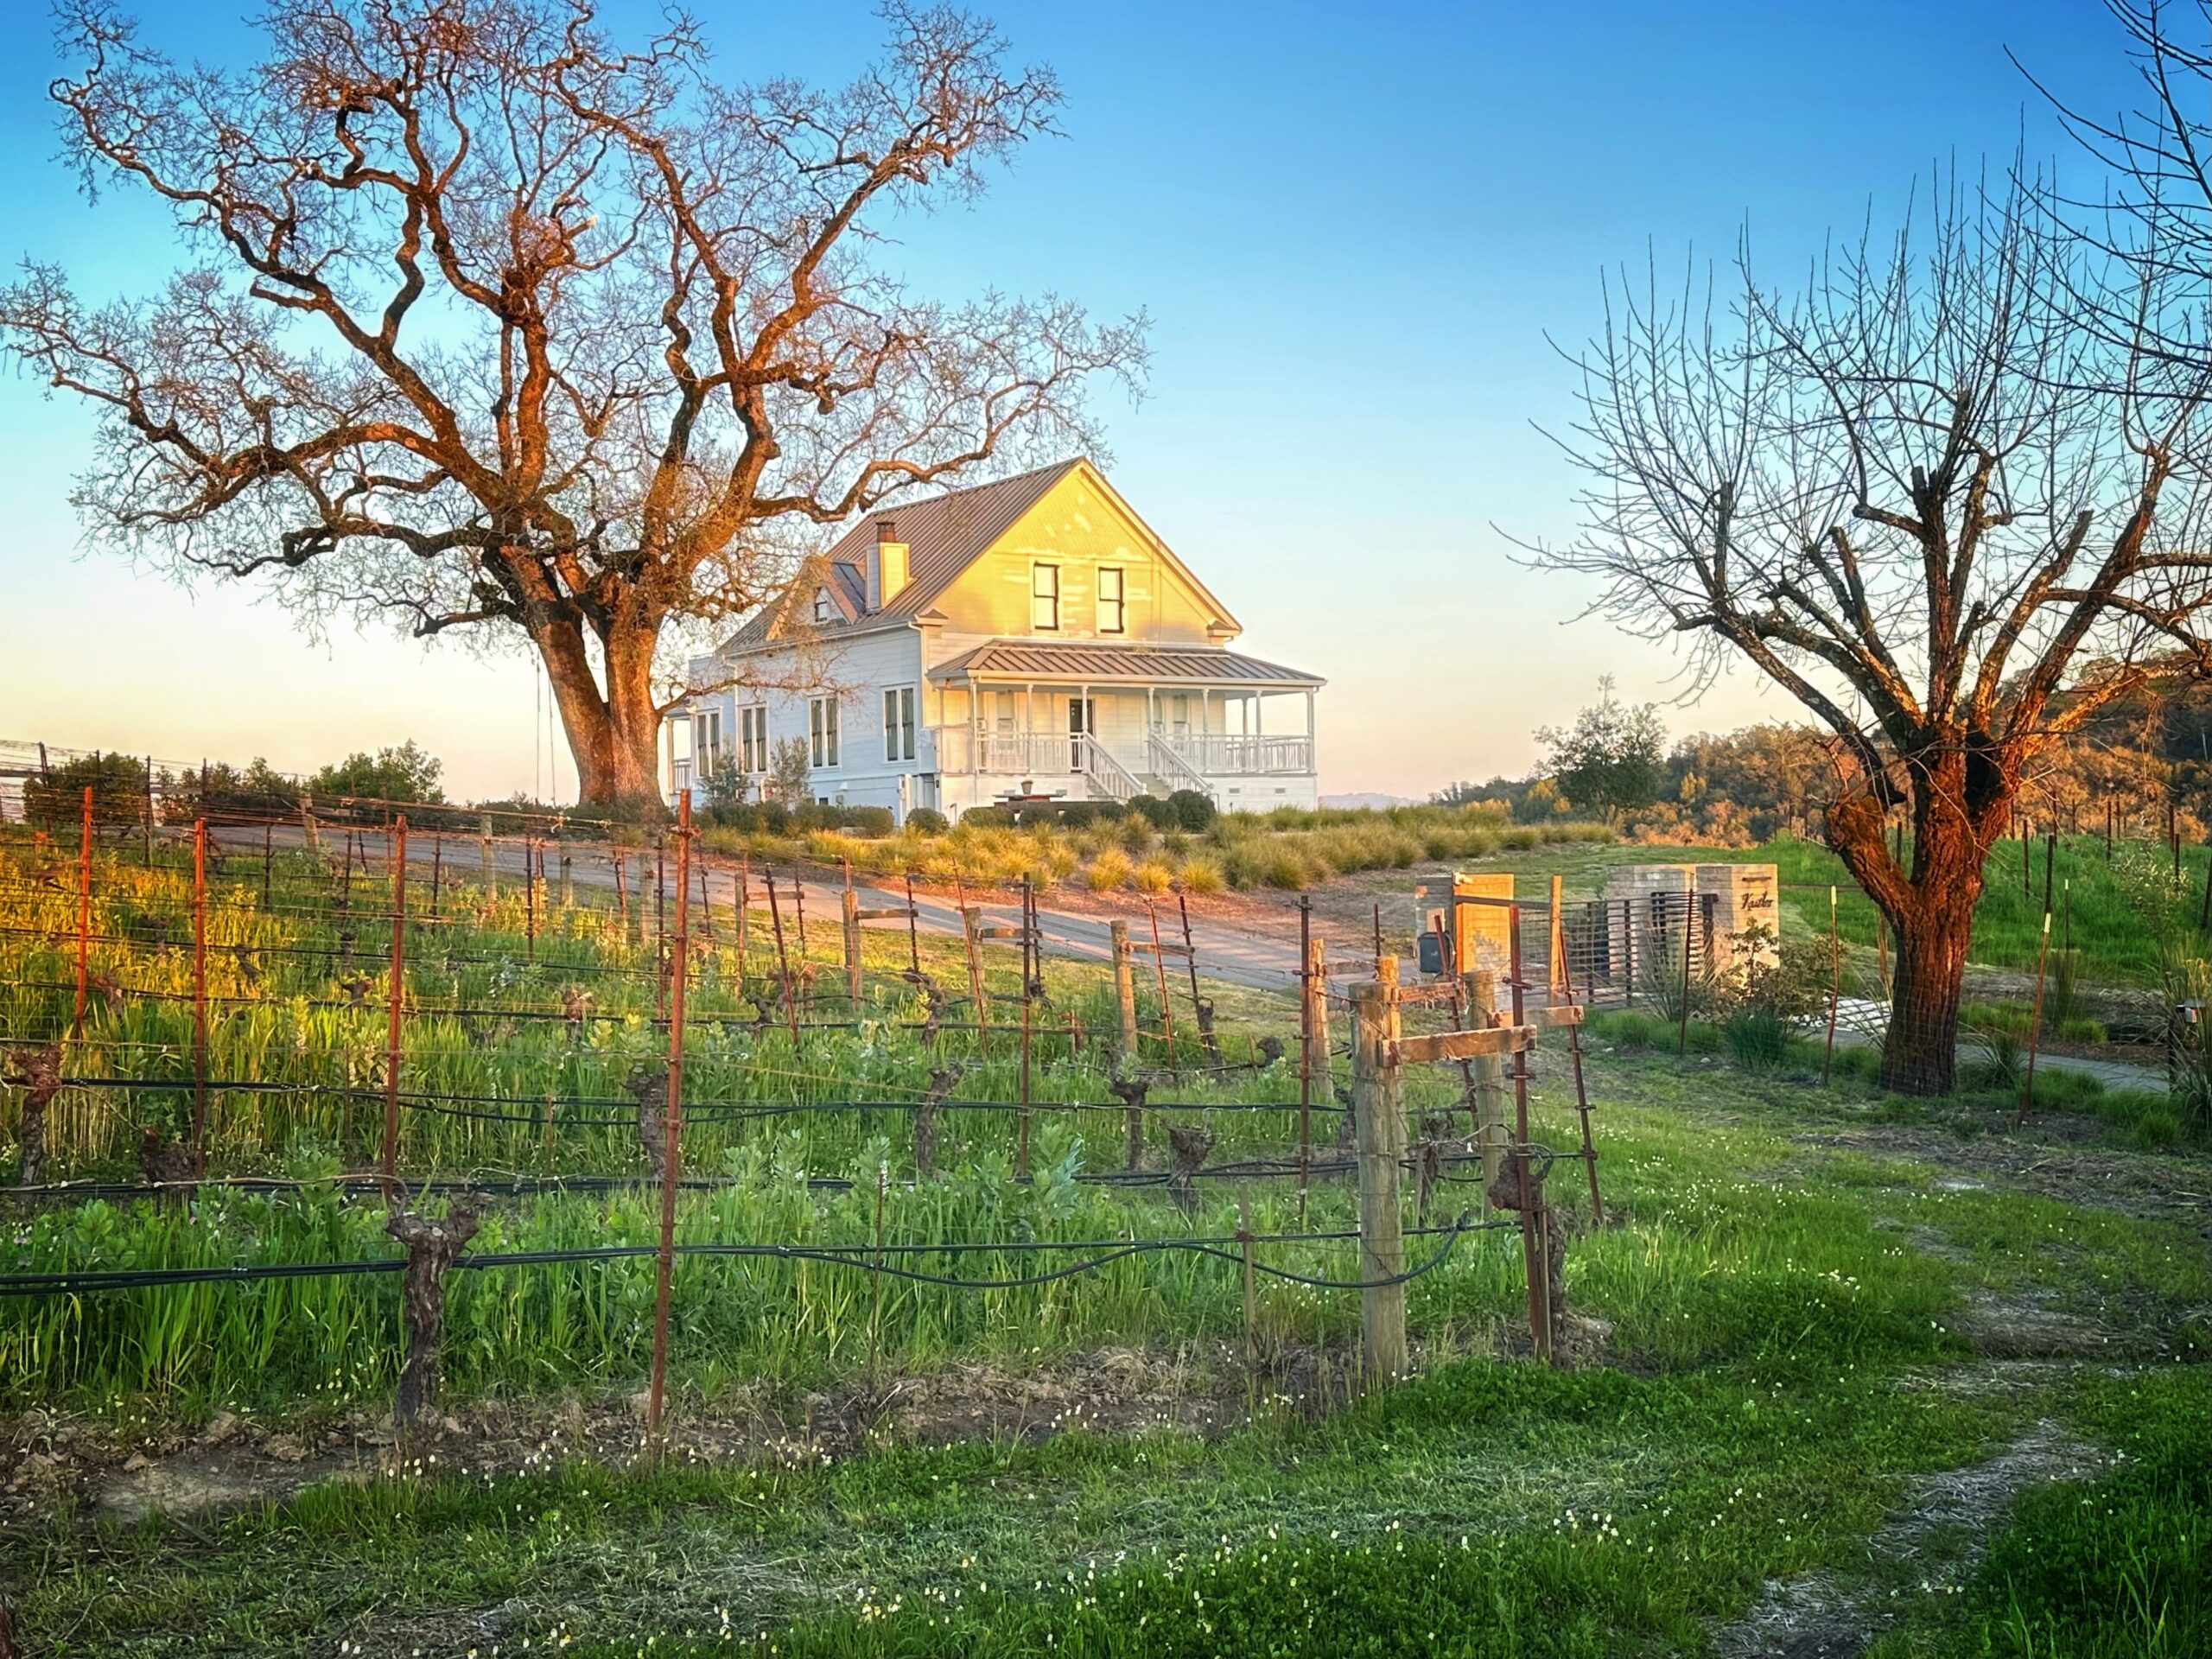 A white house sits on a hillside near a vineyard.